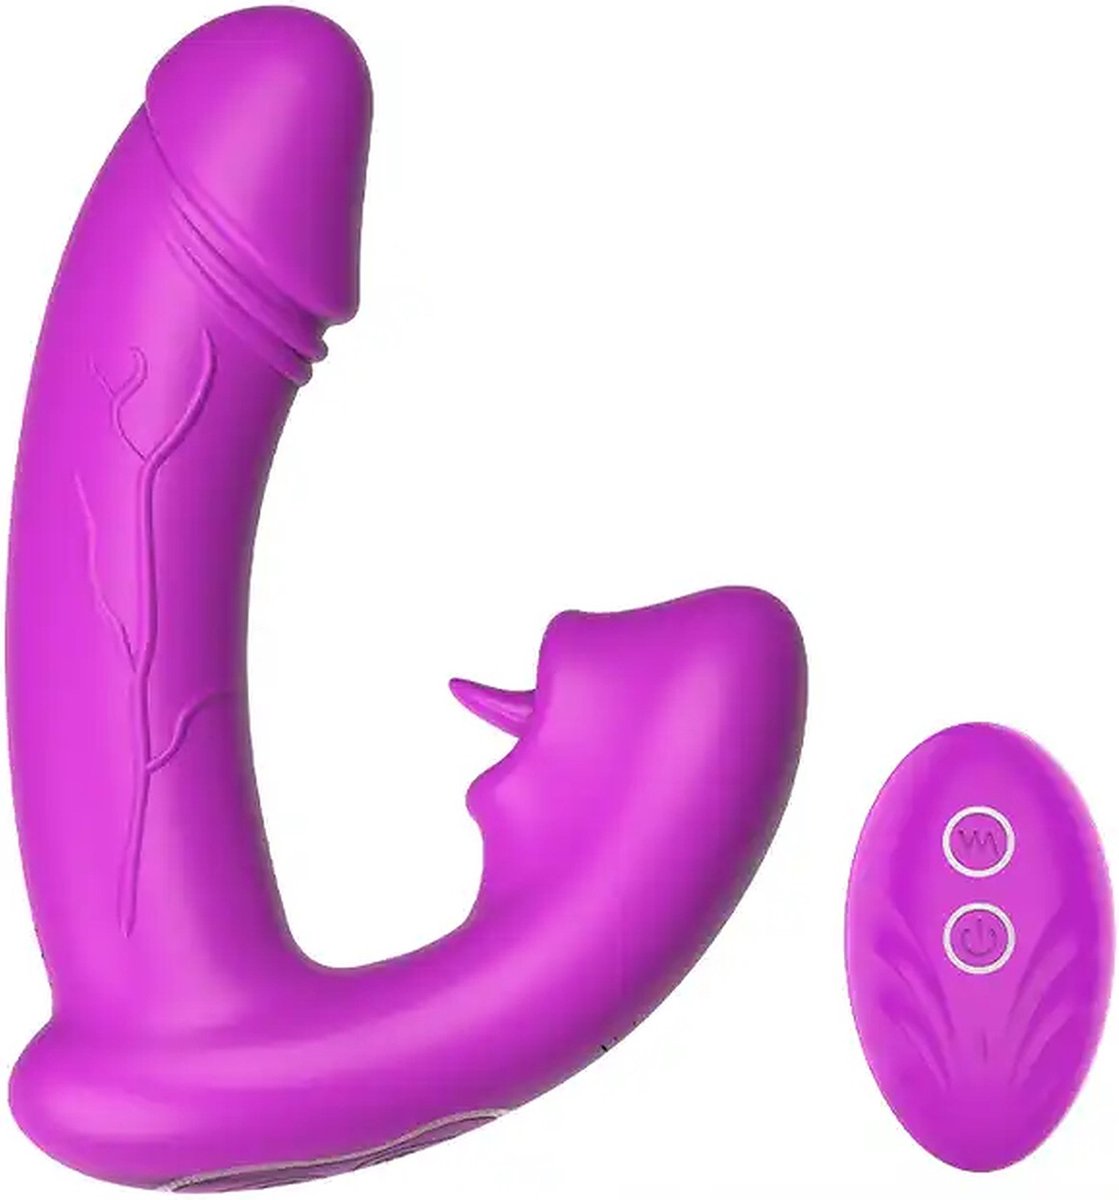 Tong Likkende Dildo Vibrator - Uzzy M.F N03 - Met afstandsbediening - 2 in 1 - Paars - G-Spot - Clitoris Stimulator - Erotiek - Waterproof - Seksspeeltjes - Sex toys - Black - Voor haar - Voor Hem